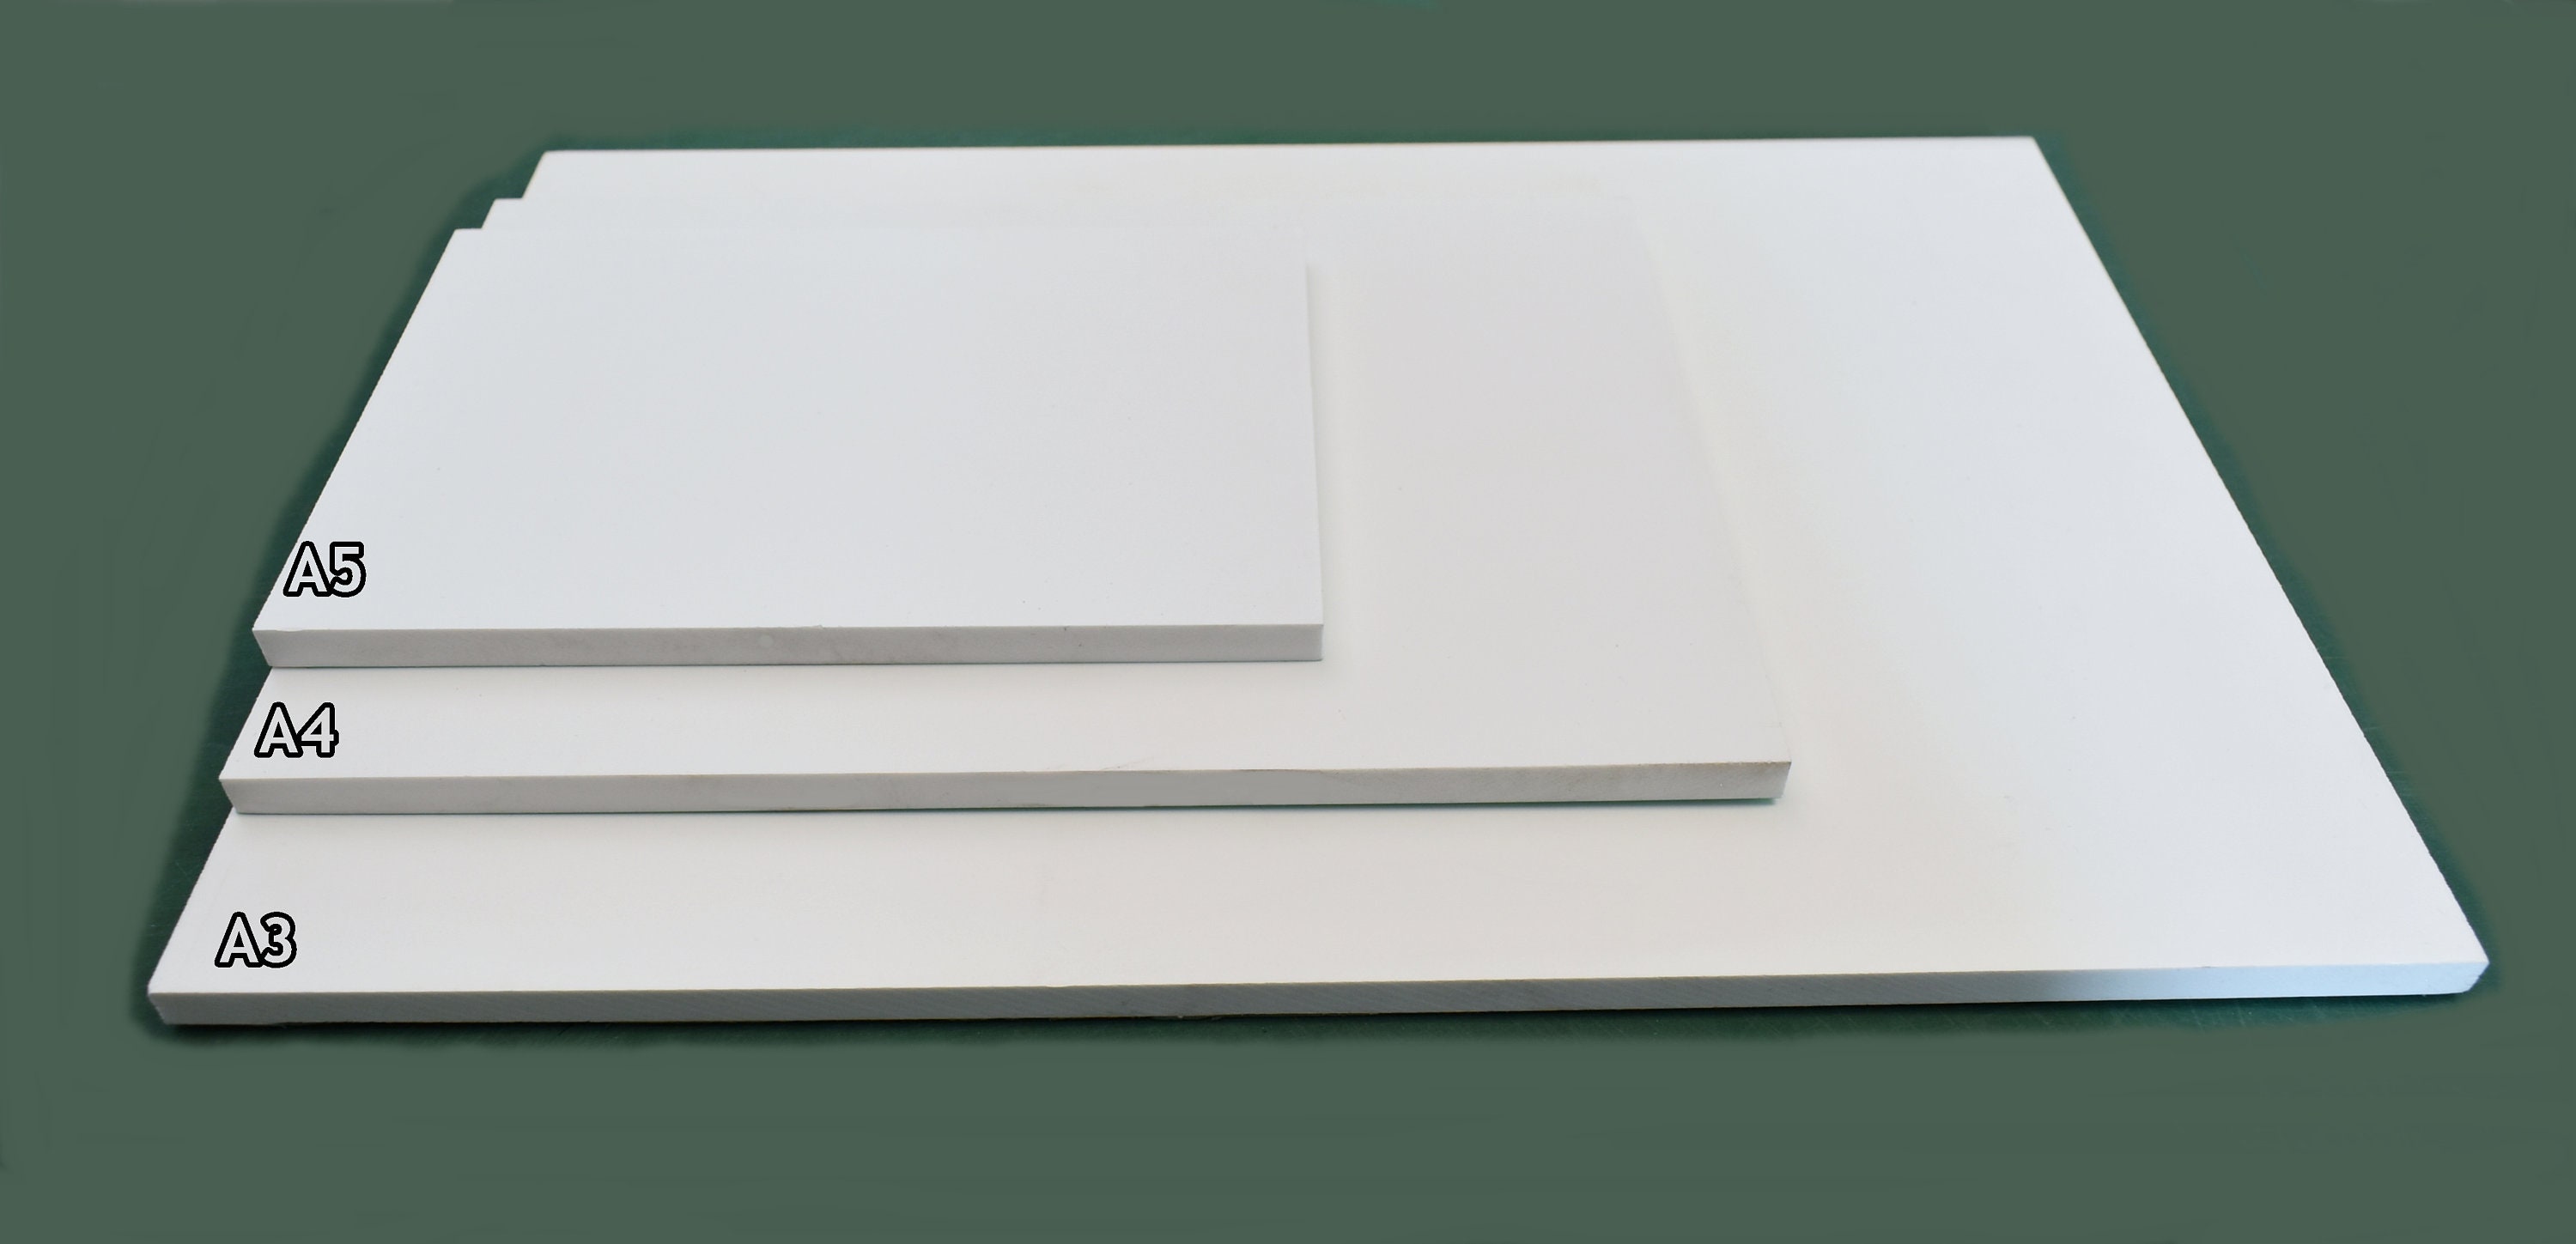 Vel blaas gat puree PVC White Plastic Sheets 3MM Thickness Sizes A5 210mm X - Etsy